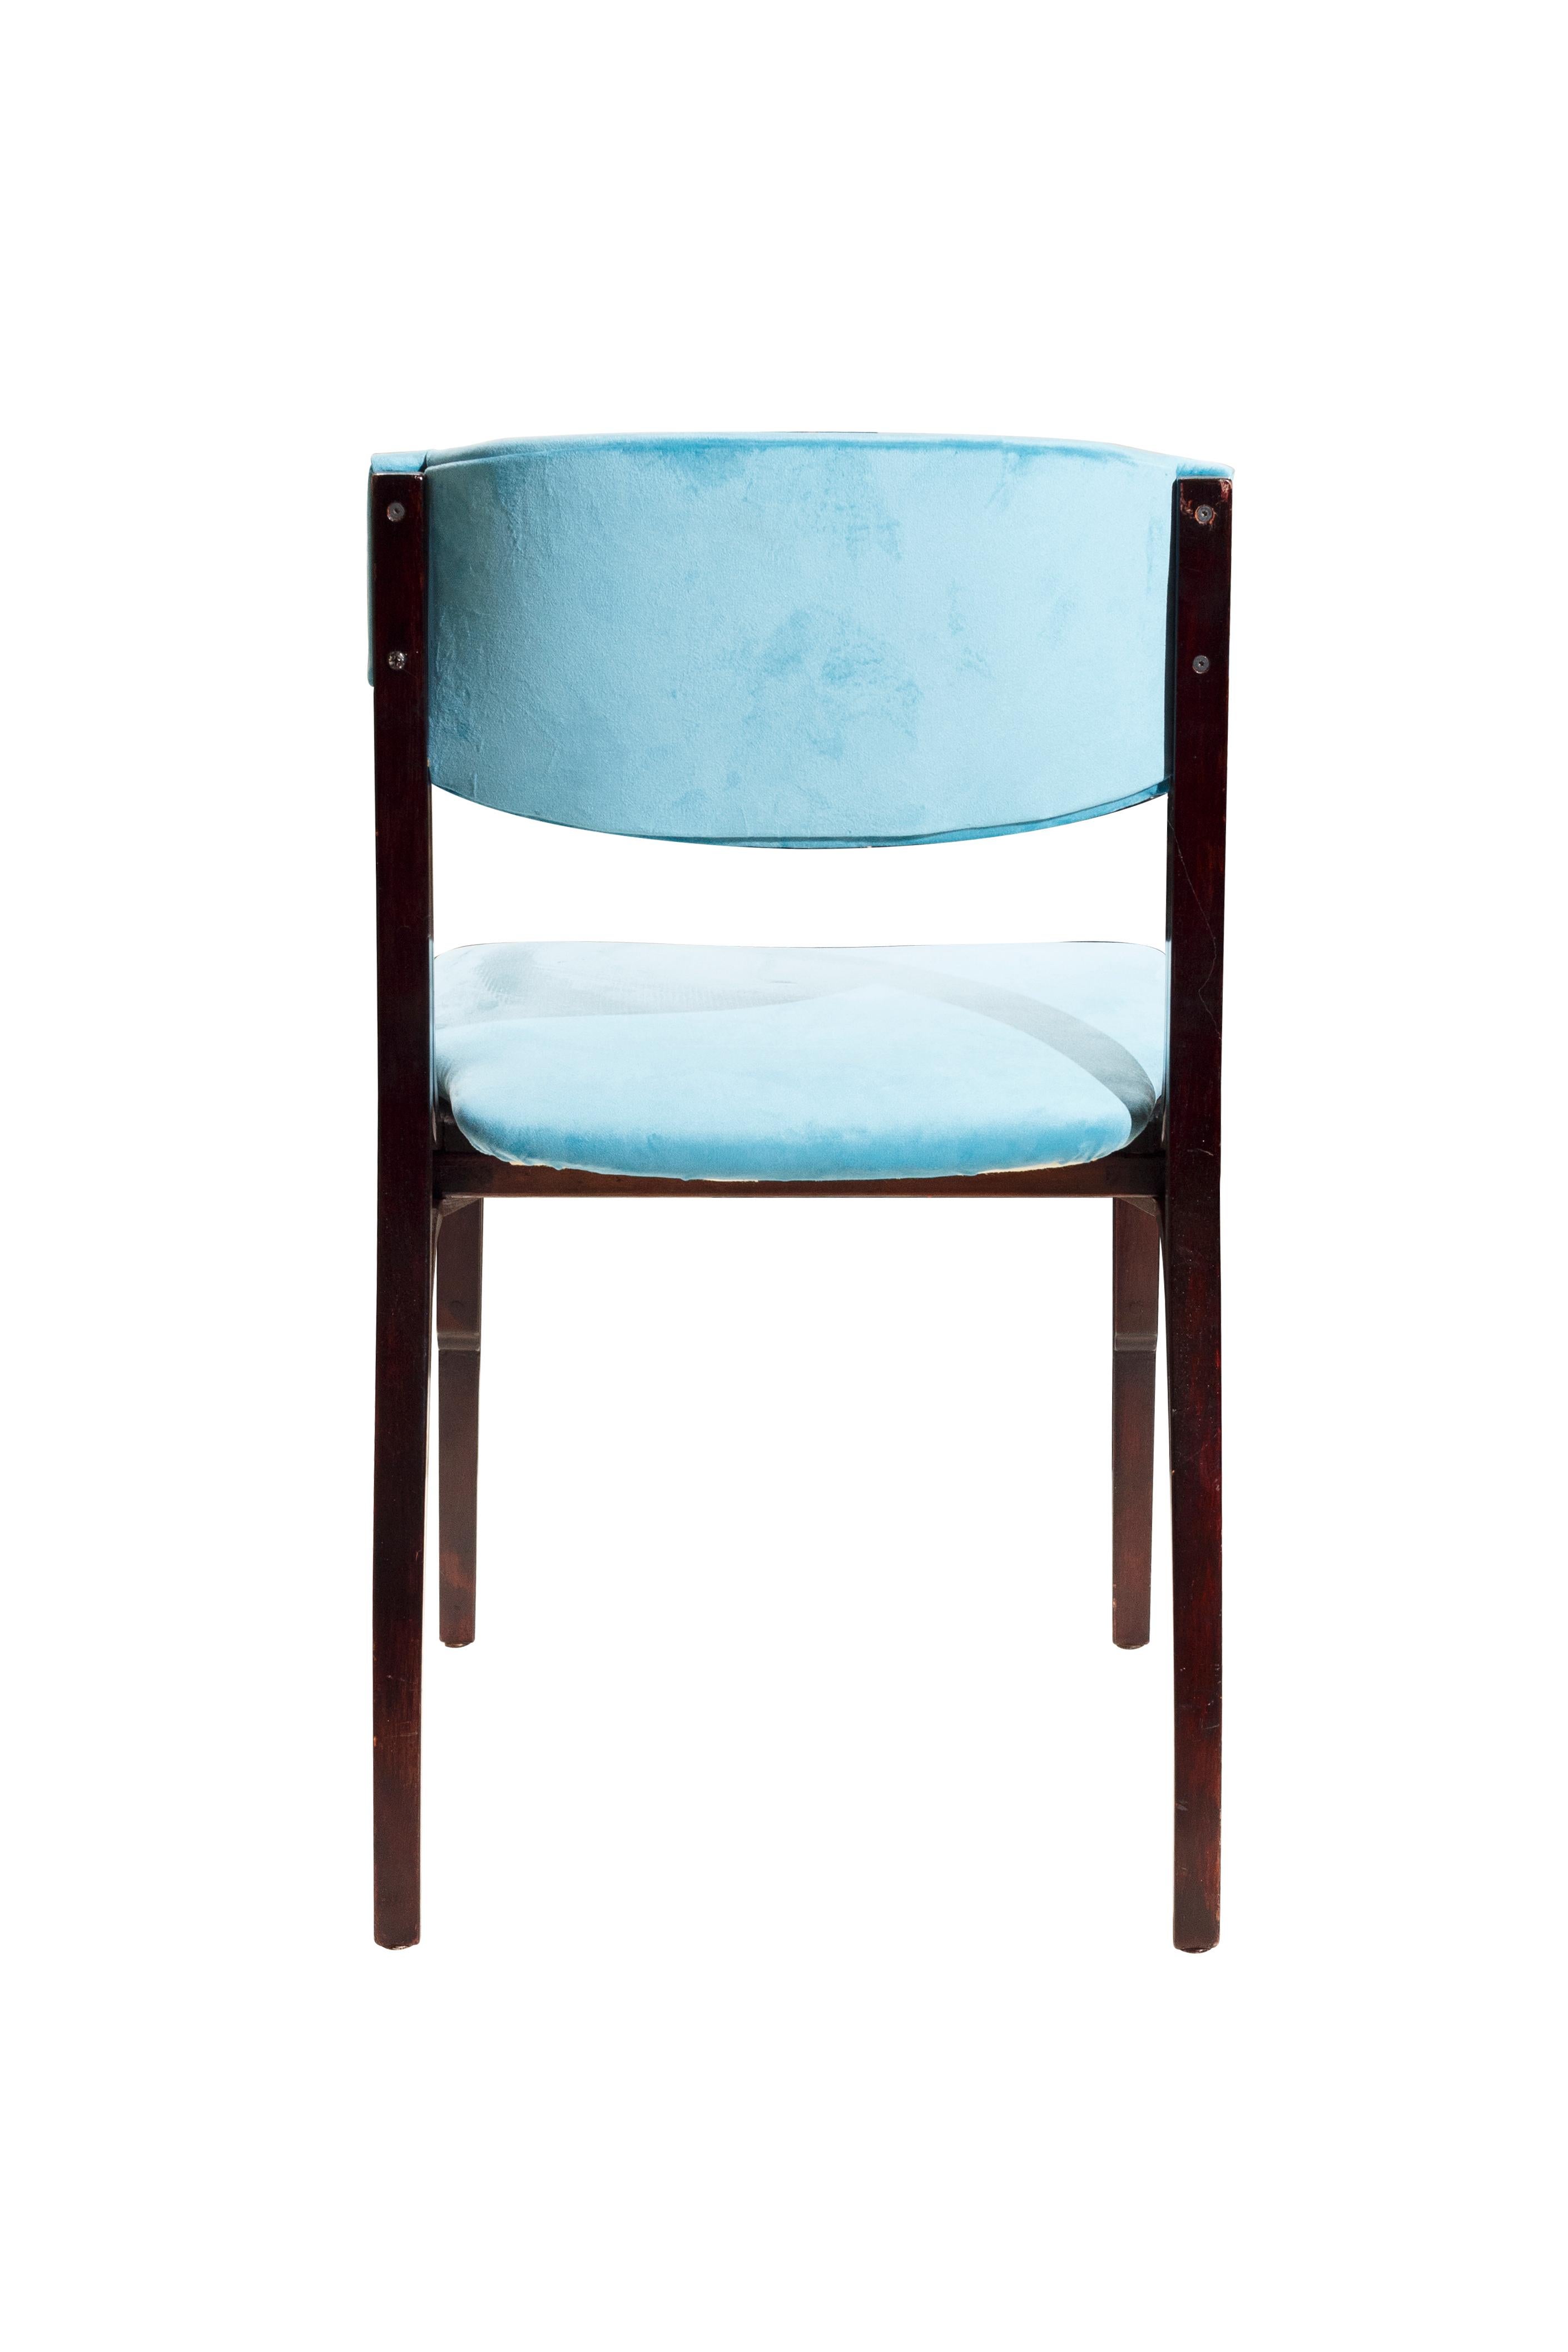 G.F. Frattini 5 sillas de terciopelo azul Modernas de mediados de siglo De Cantieri Carugati Italiano en venta